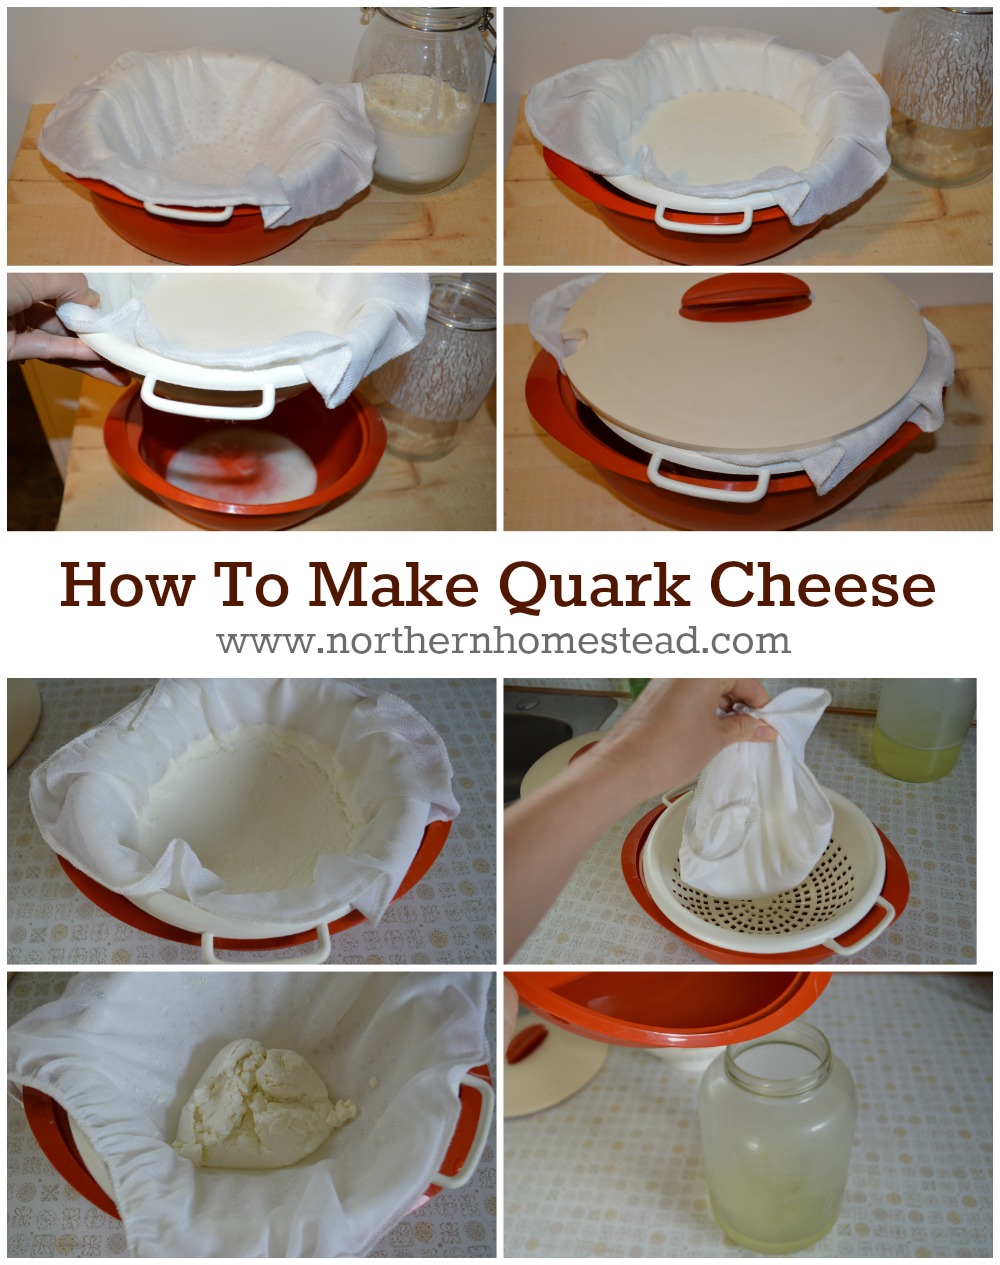 How To Make Quark Cheese